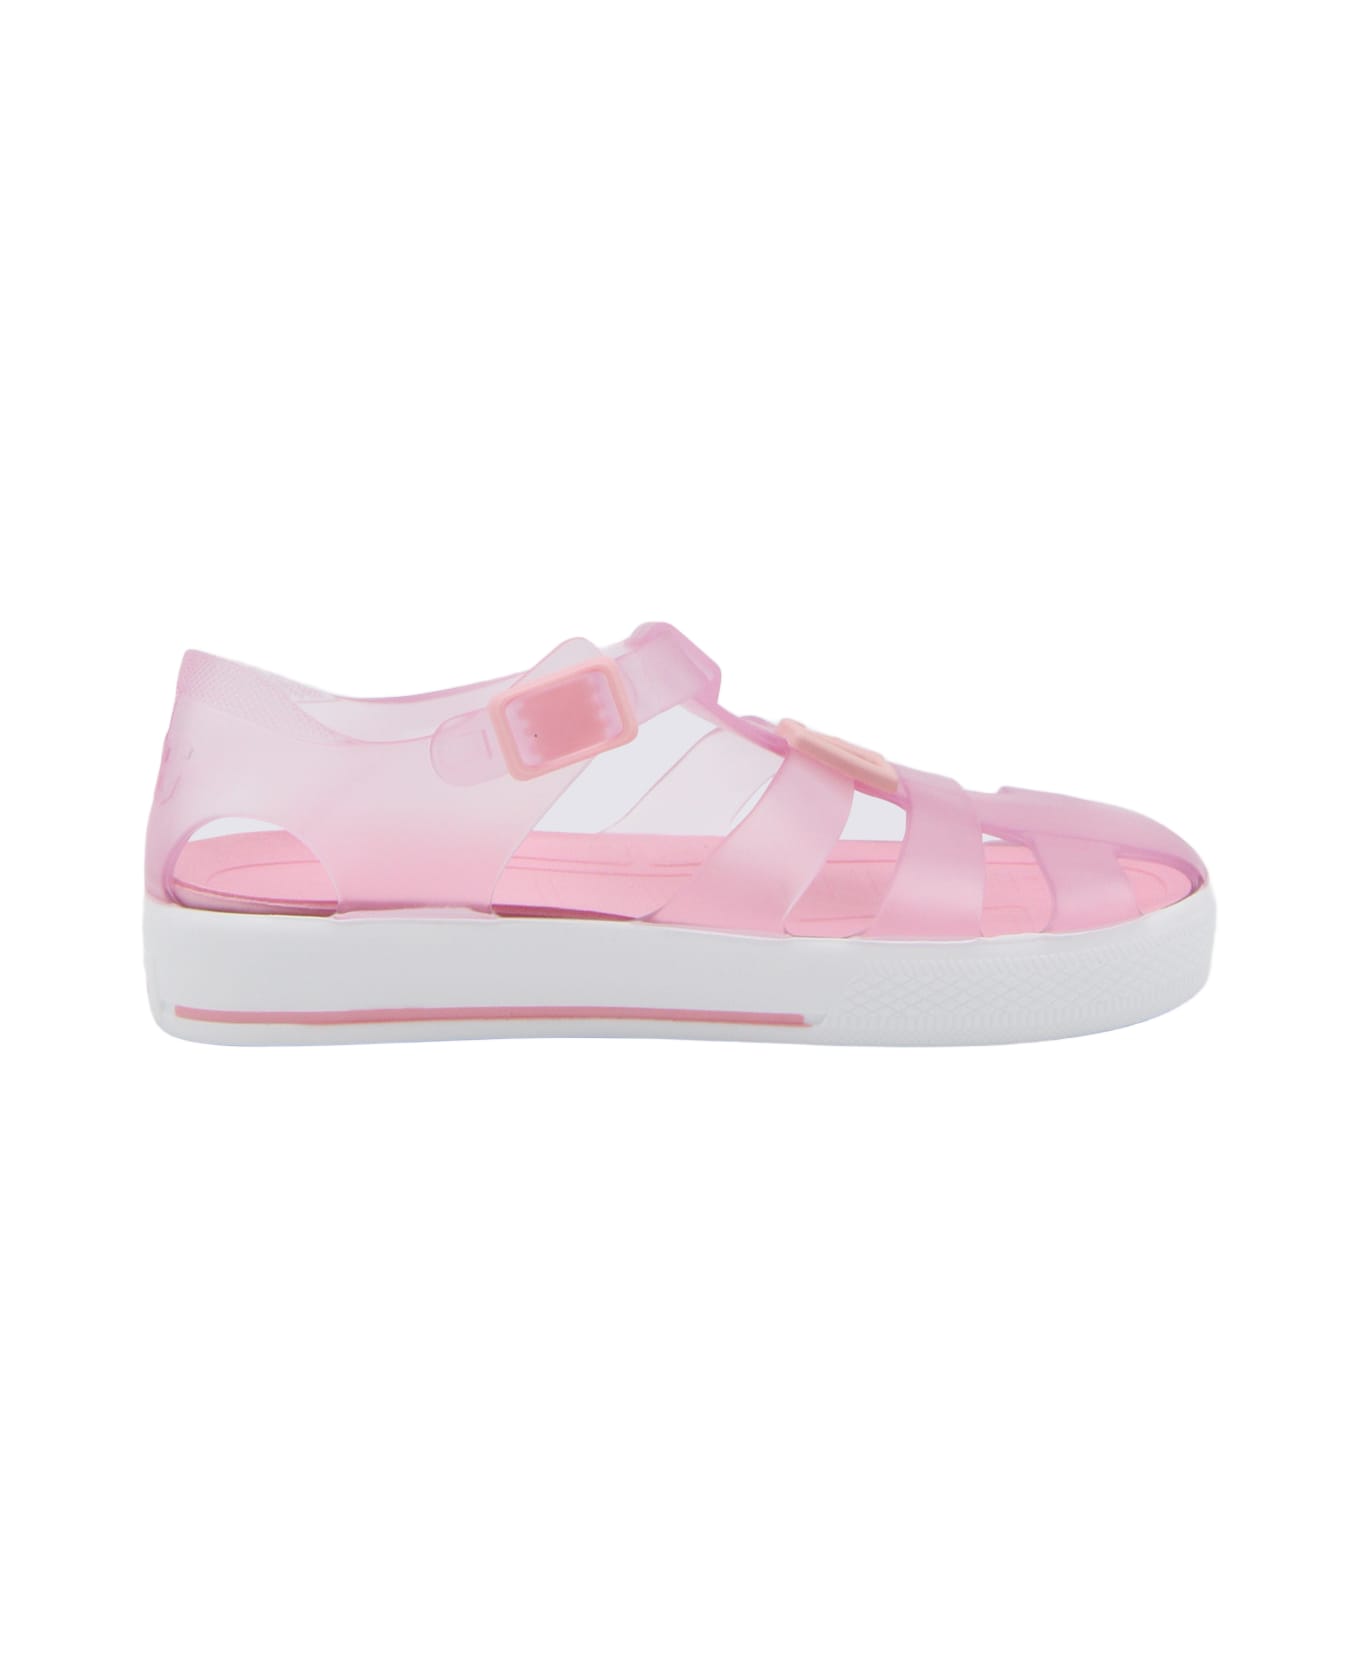 Dolce & Gabbana Pink Rubber Sandals - Pink シューズ